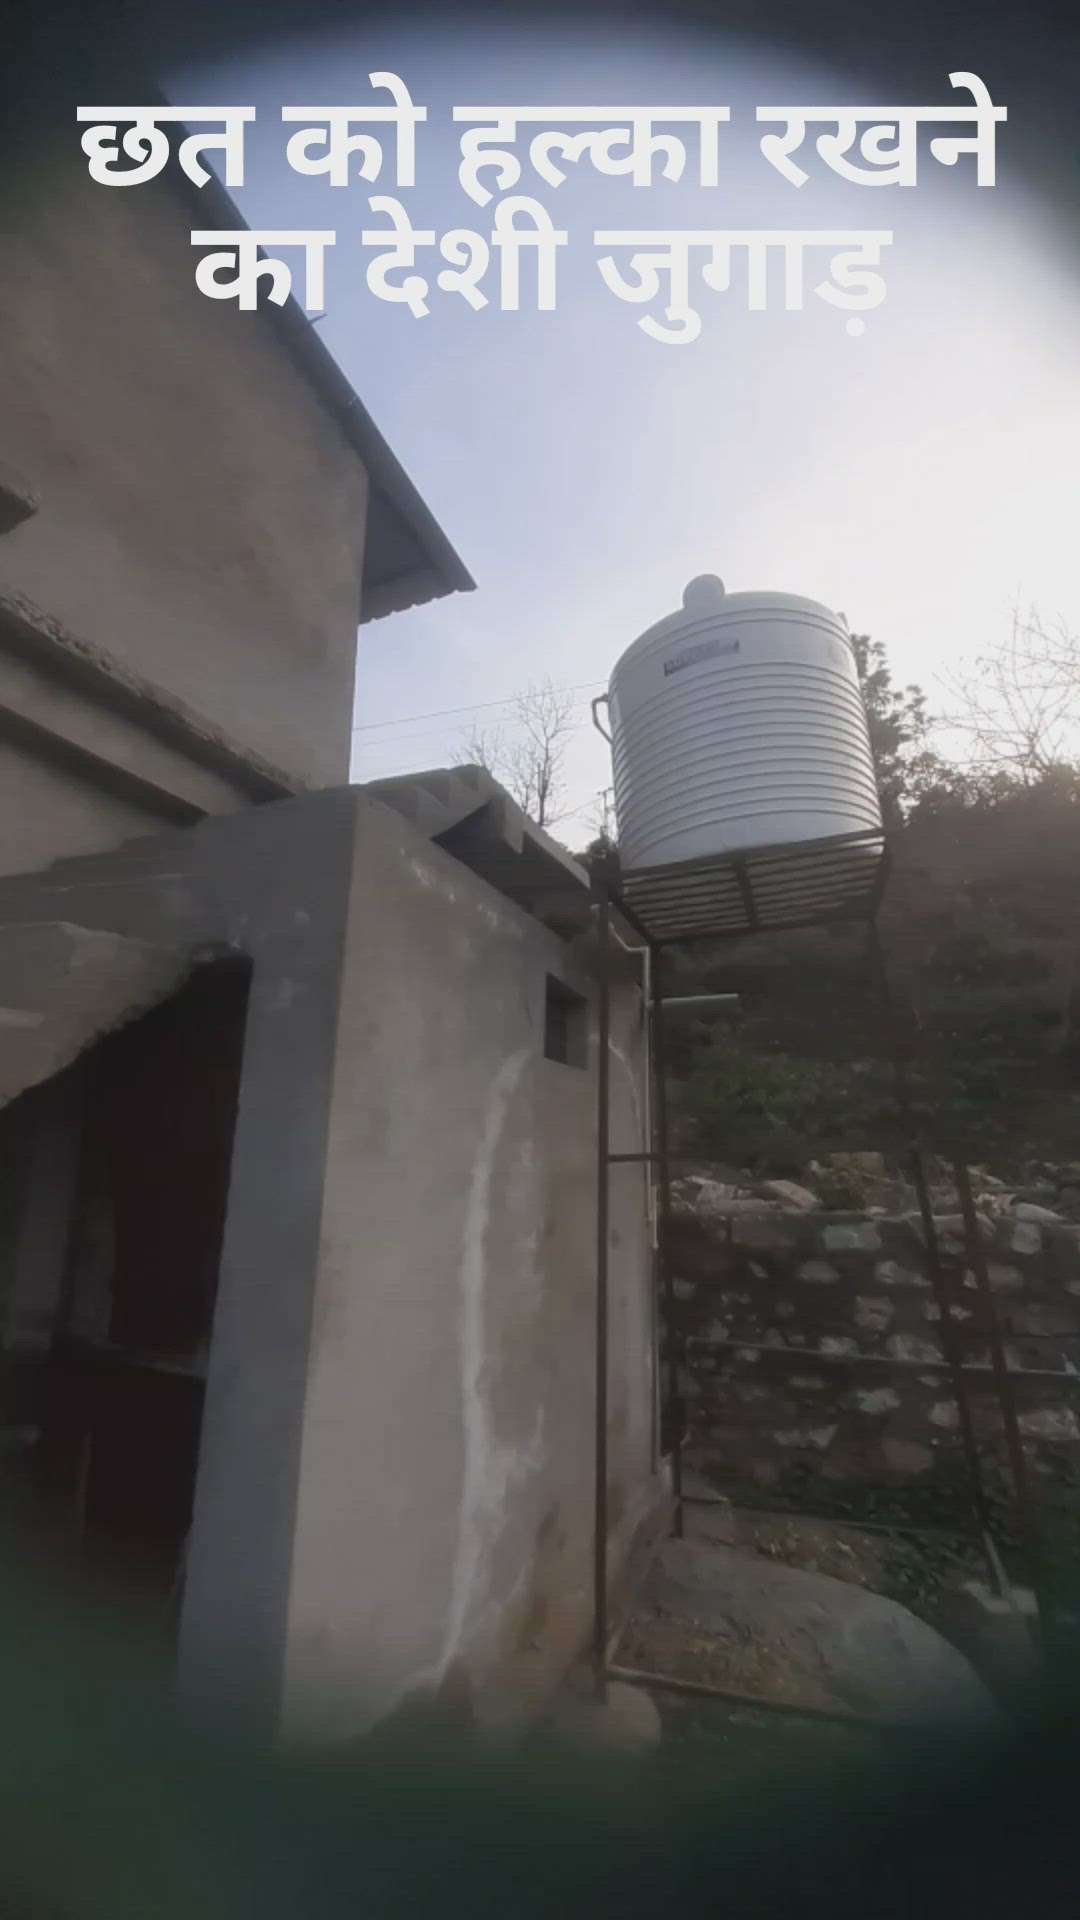 #globalsandeep #roofwaterproofing #delhi #waterproofing #Haryana #punjab #india #Consterction #noida #wall #basement #balcony #uttrakhand 
RAMESH BISHT
8860505190